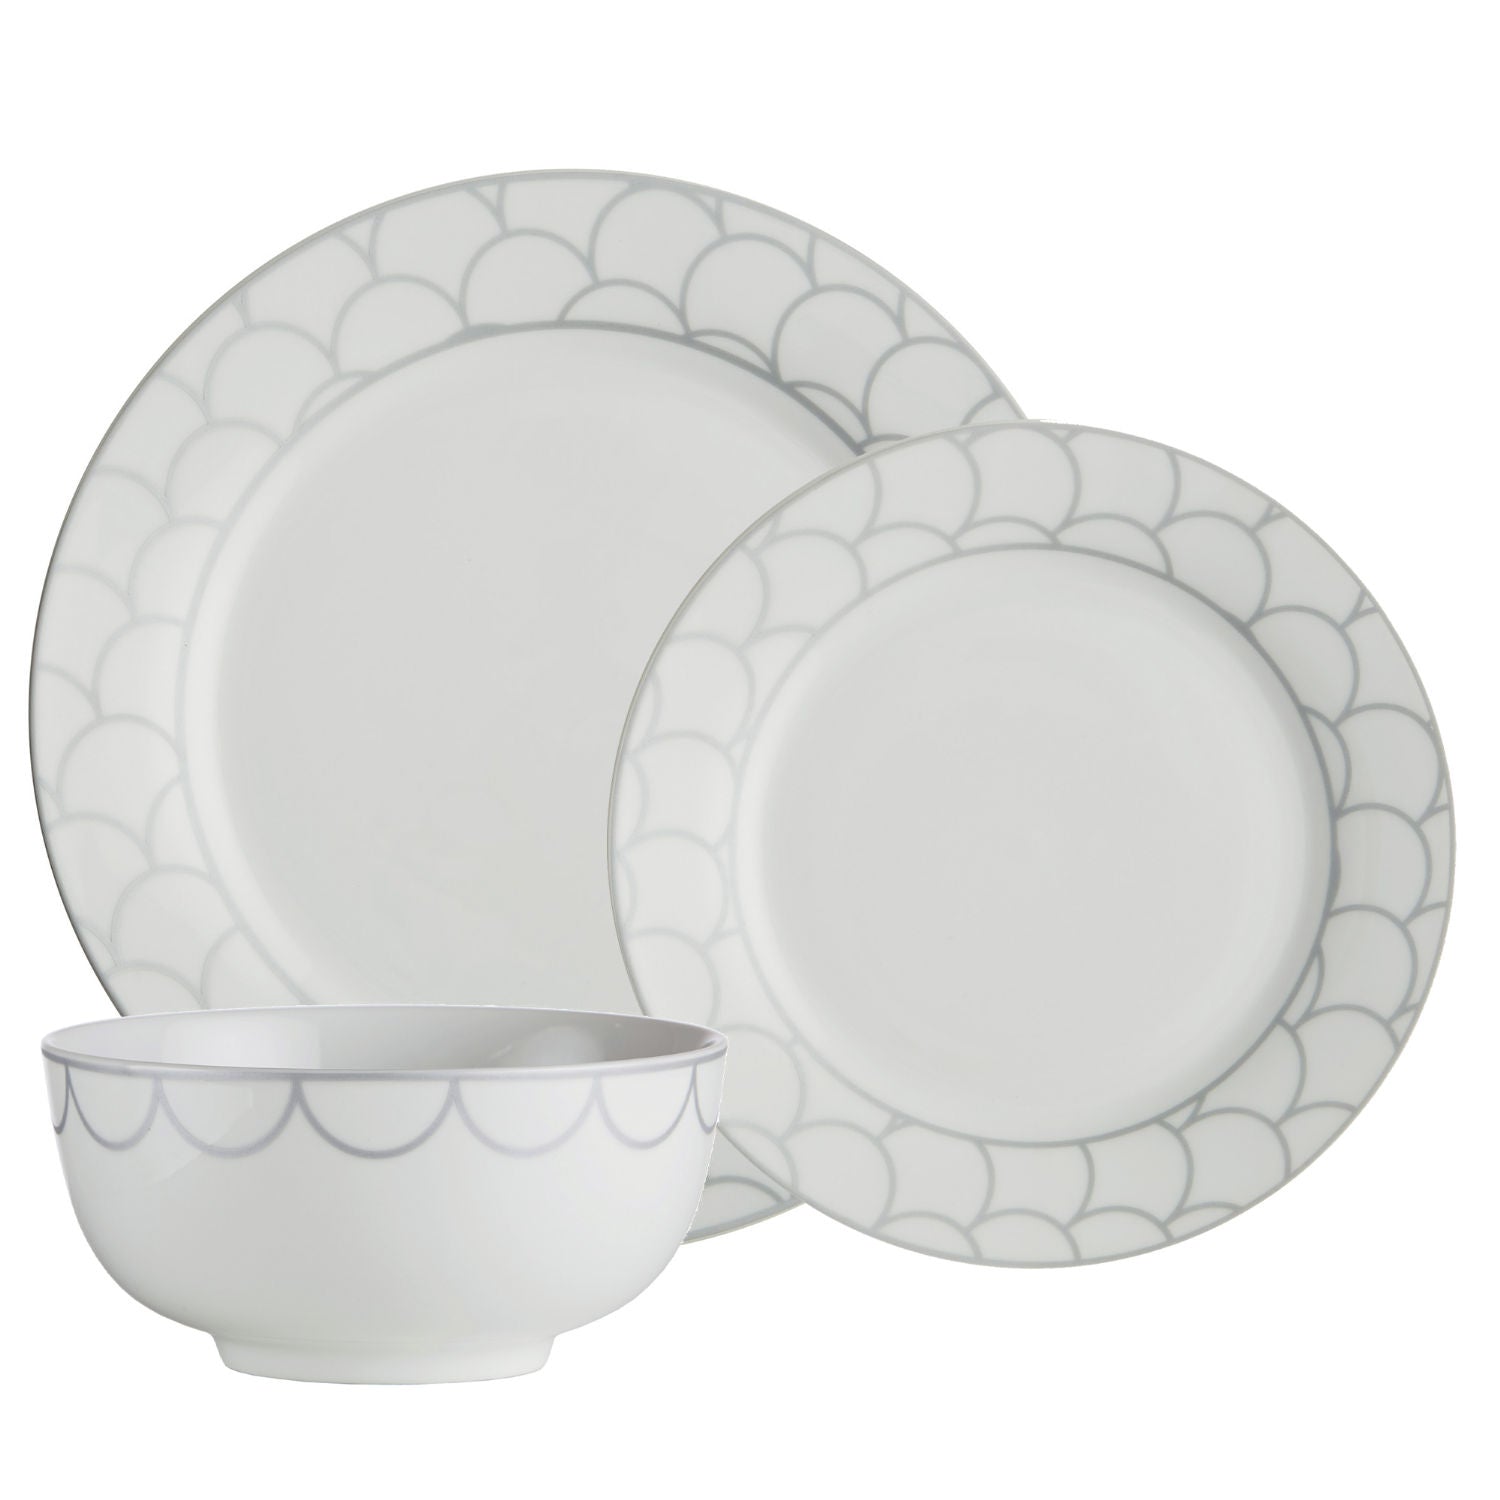 Dinnerware Set 12 Piece Silver Scale, Service for 4 - DecoElegance - Dinnerware Set